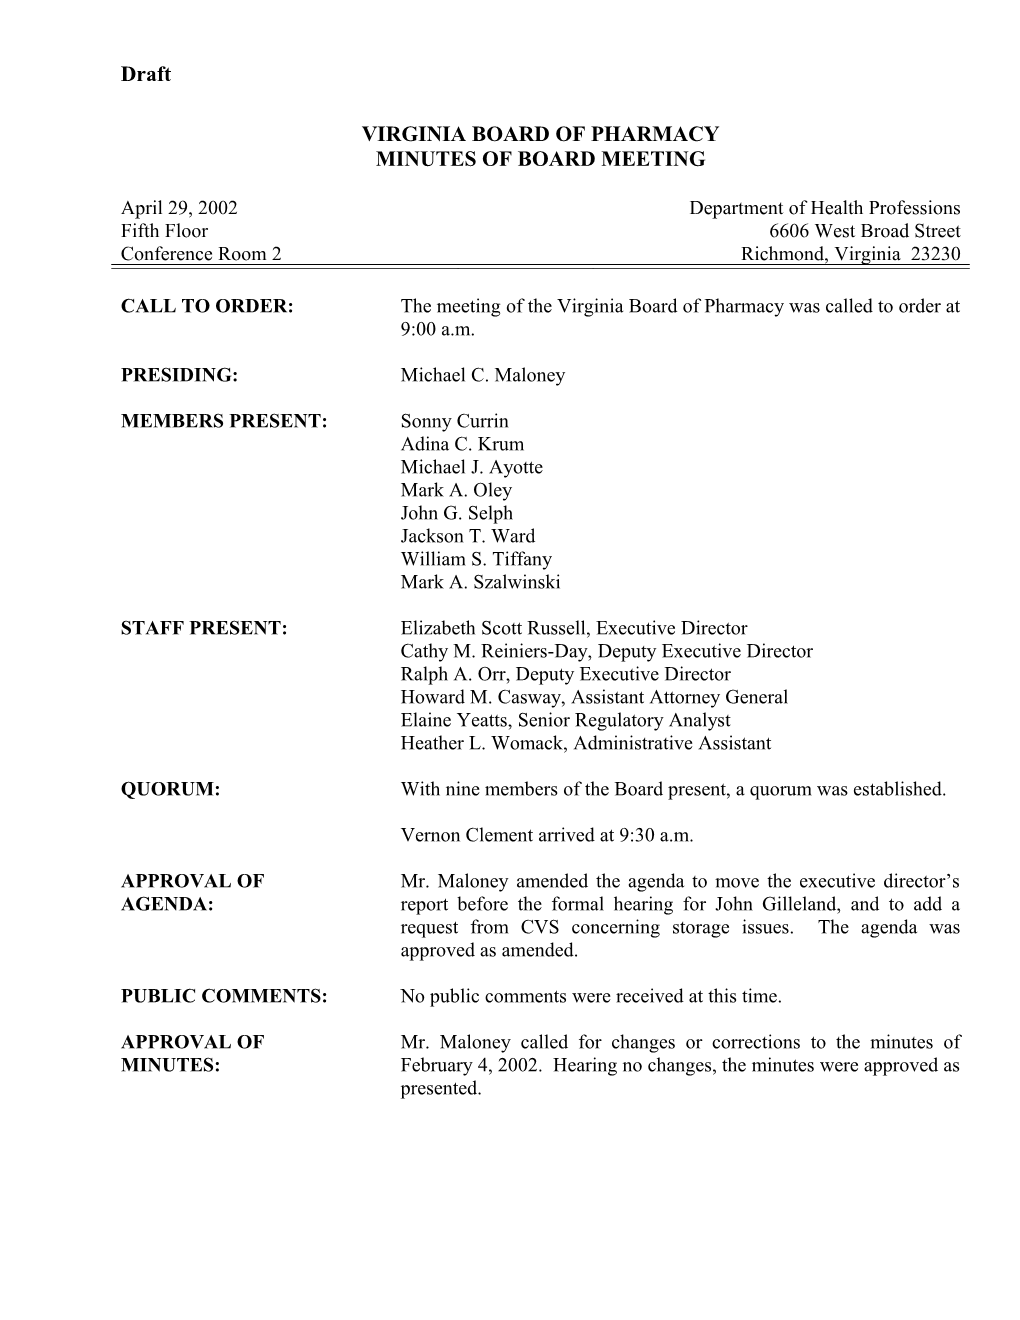 Virginia Board of Pharmacy Minutes 04-29-2002